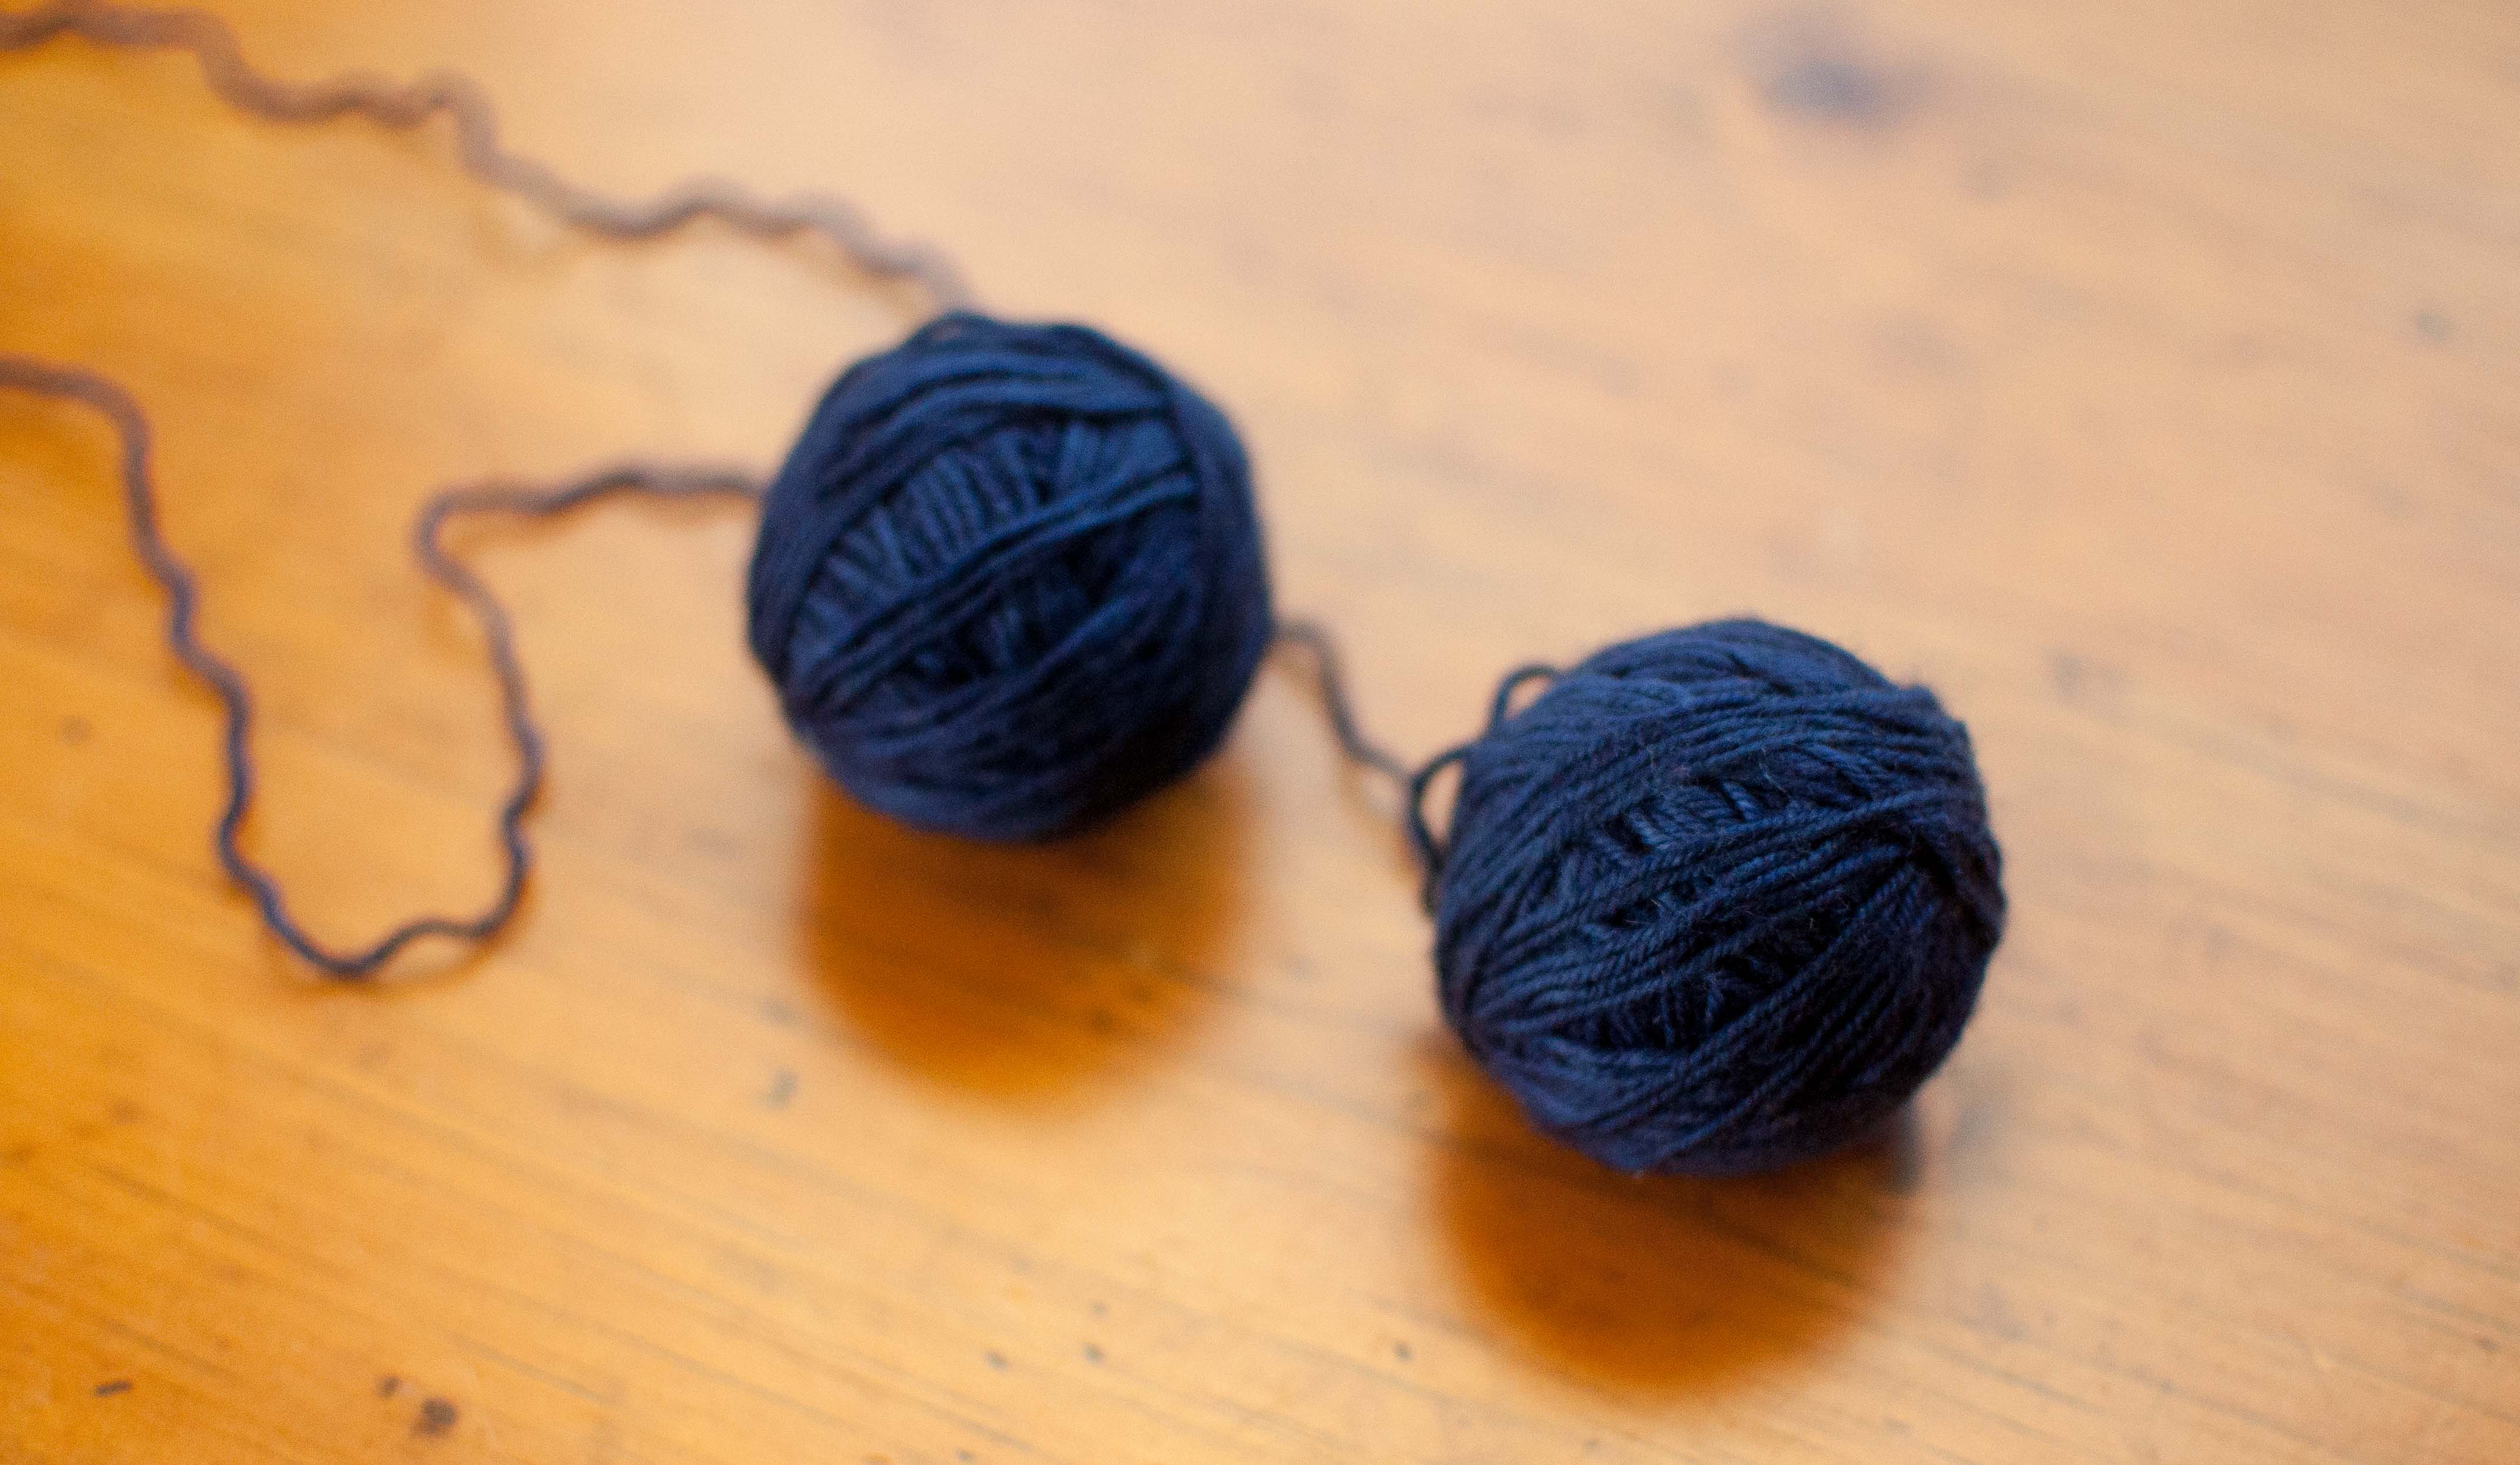 The dreaded crinkly yarn